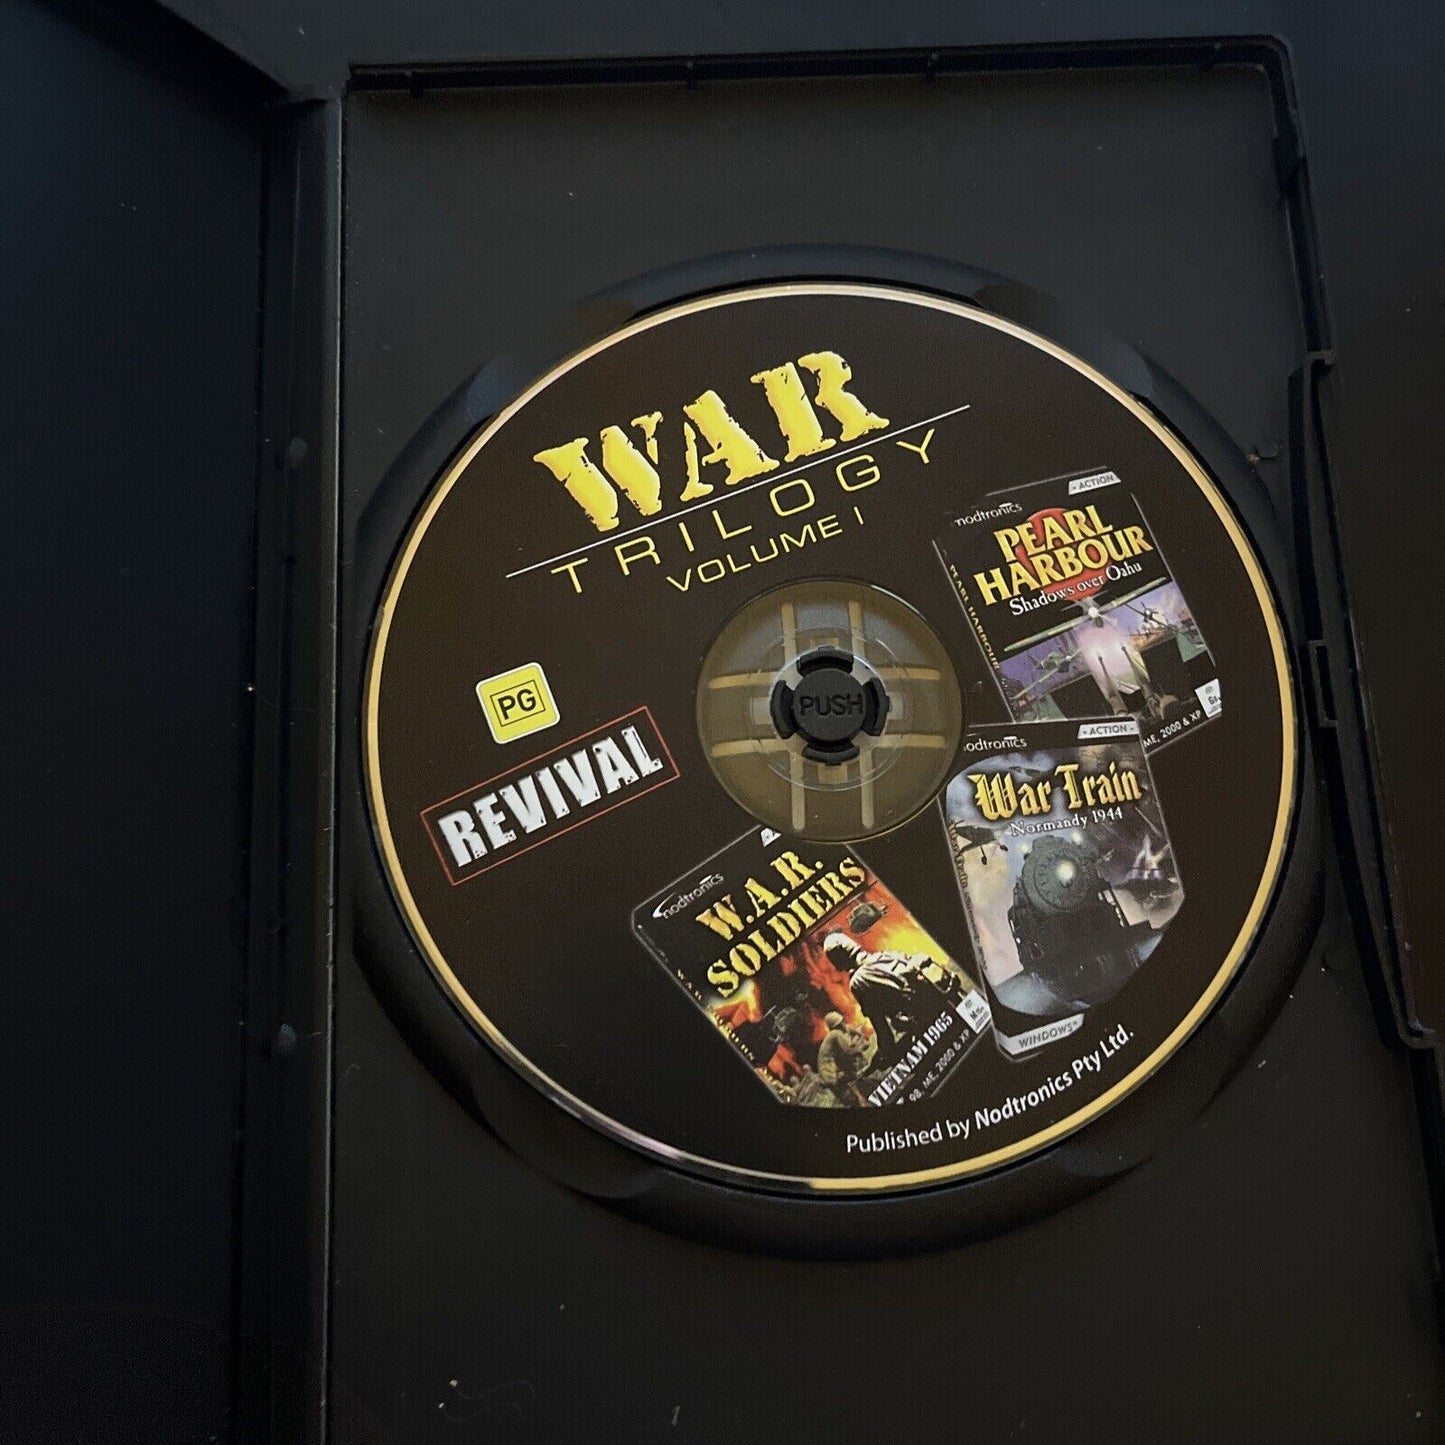 Eureka War Trilogy Vol 1 - Pearl Harbour / War Soldiers / War Train PC CDROM